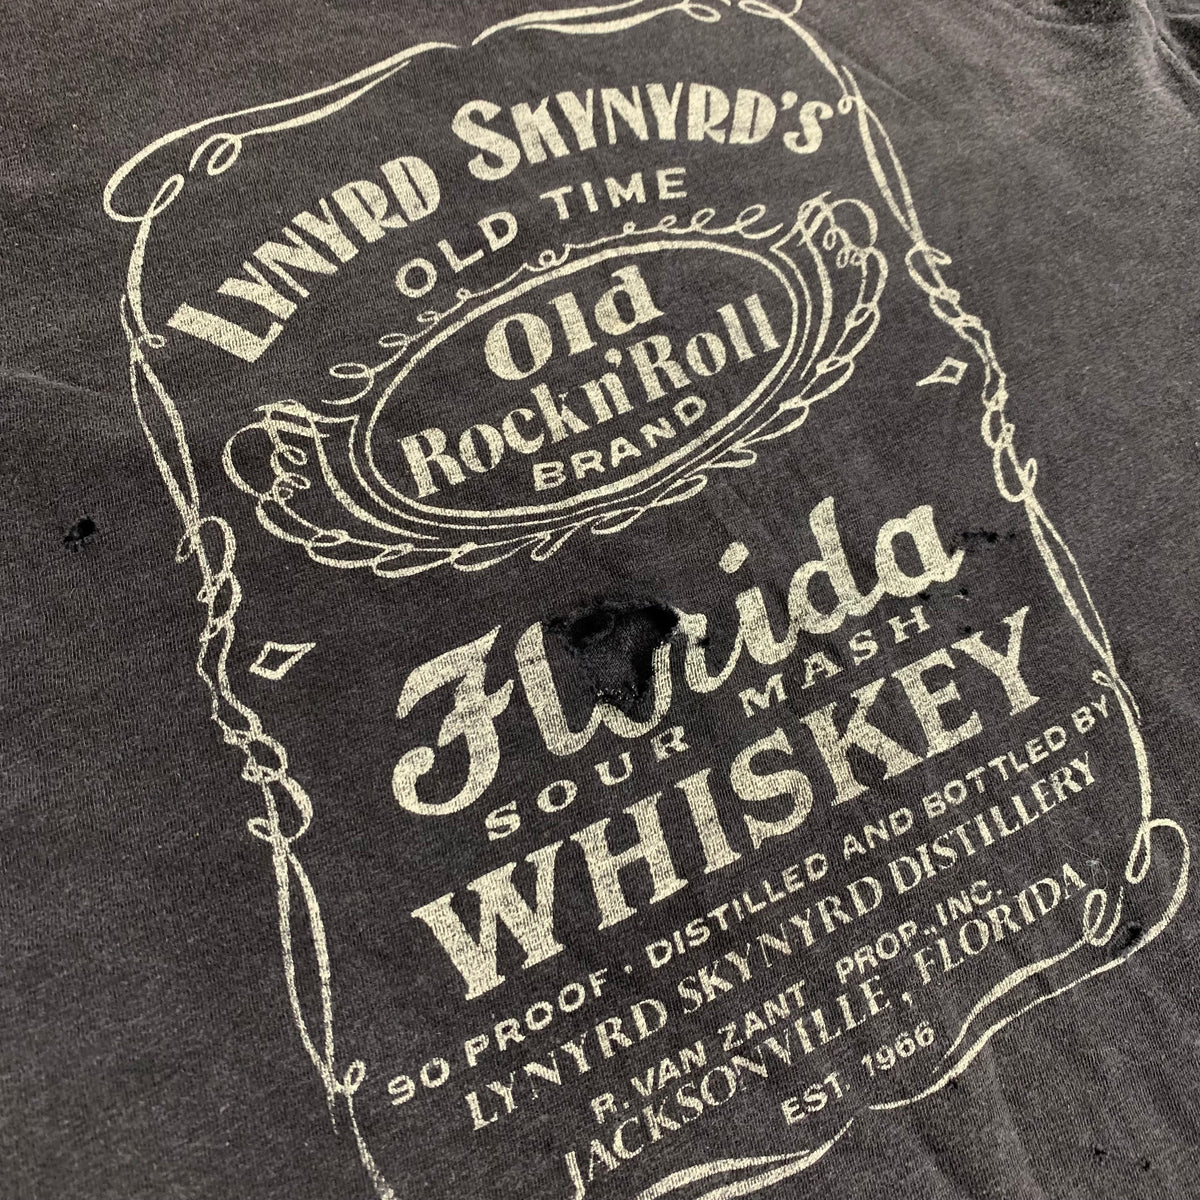 Vintage Lynyrd Skynyrd &quot;Florida Whiskey&quot; T-Shirt